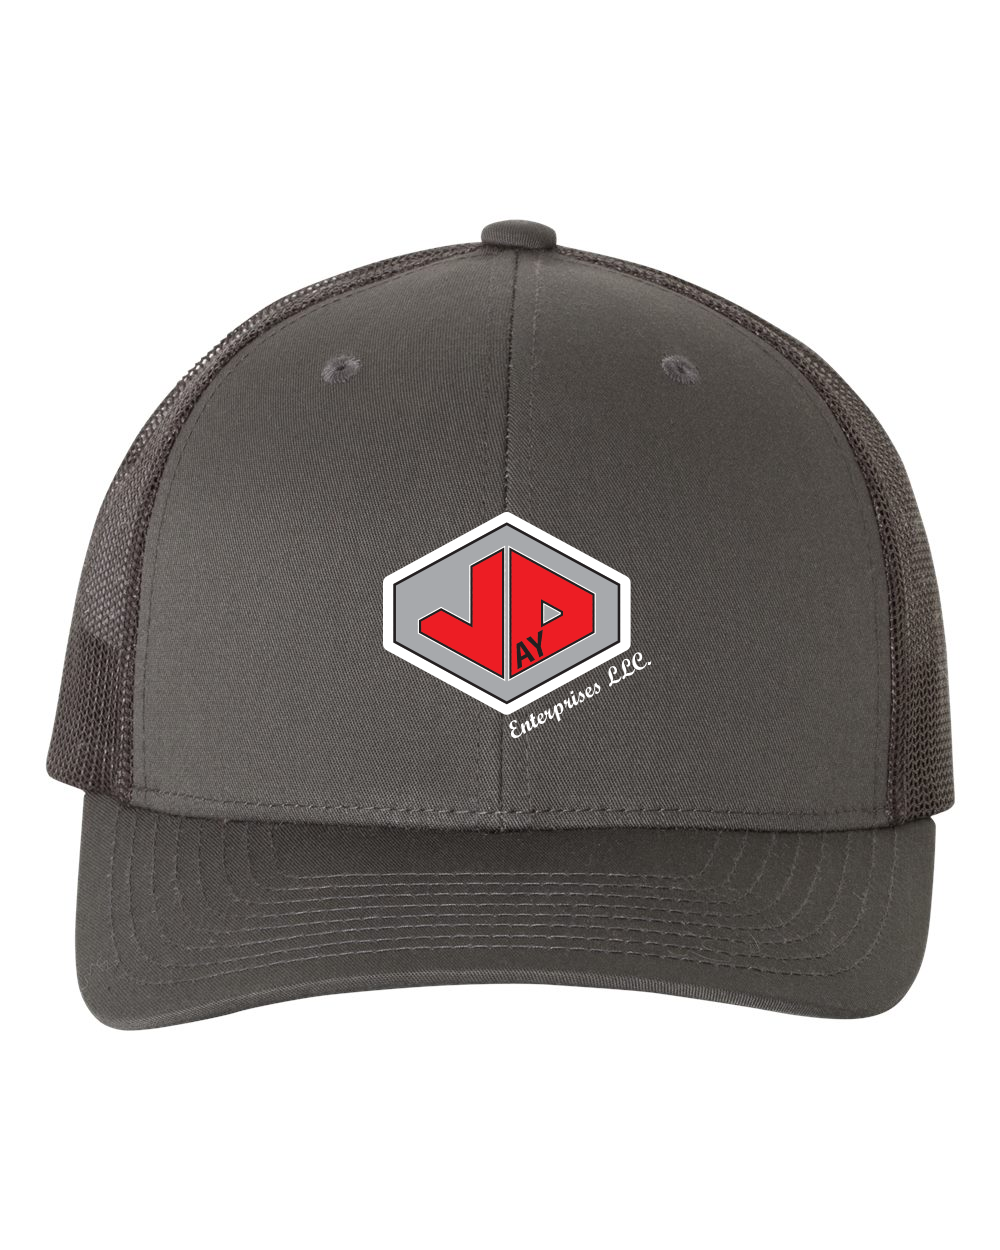 Jay D Enterprises - Six-Panel Retro Trucker Cap